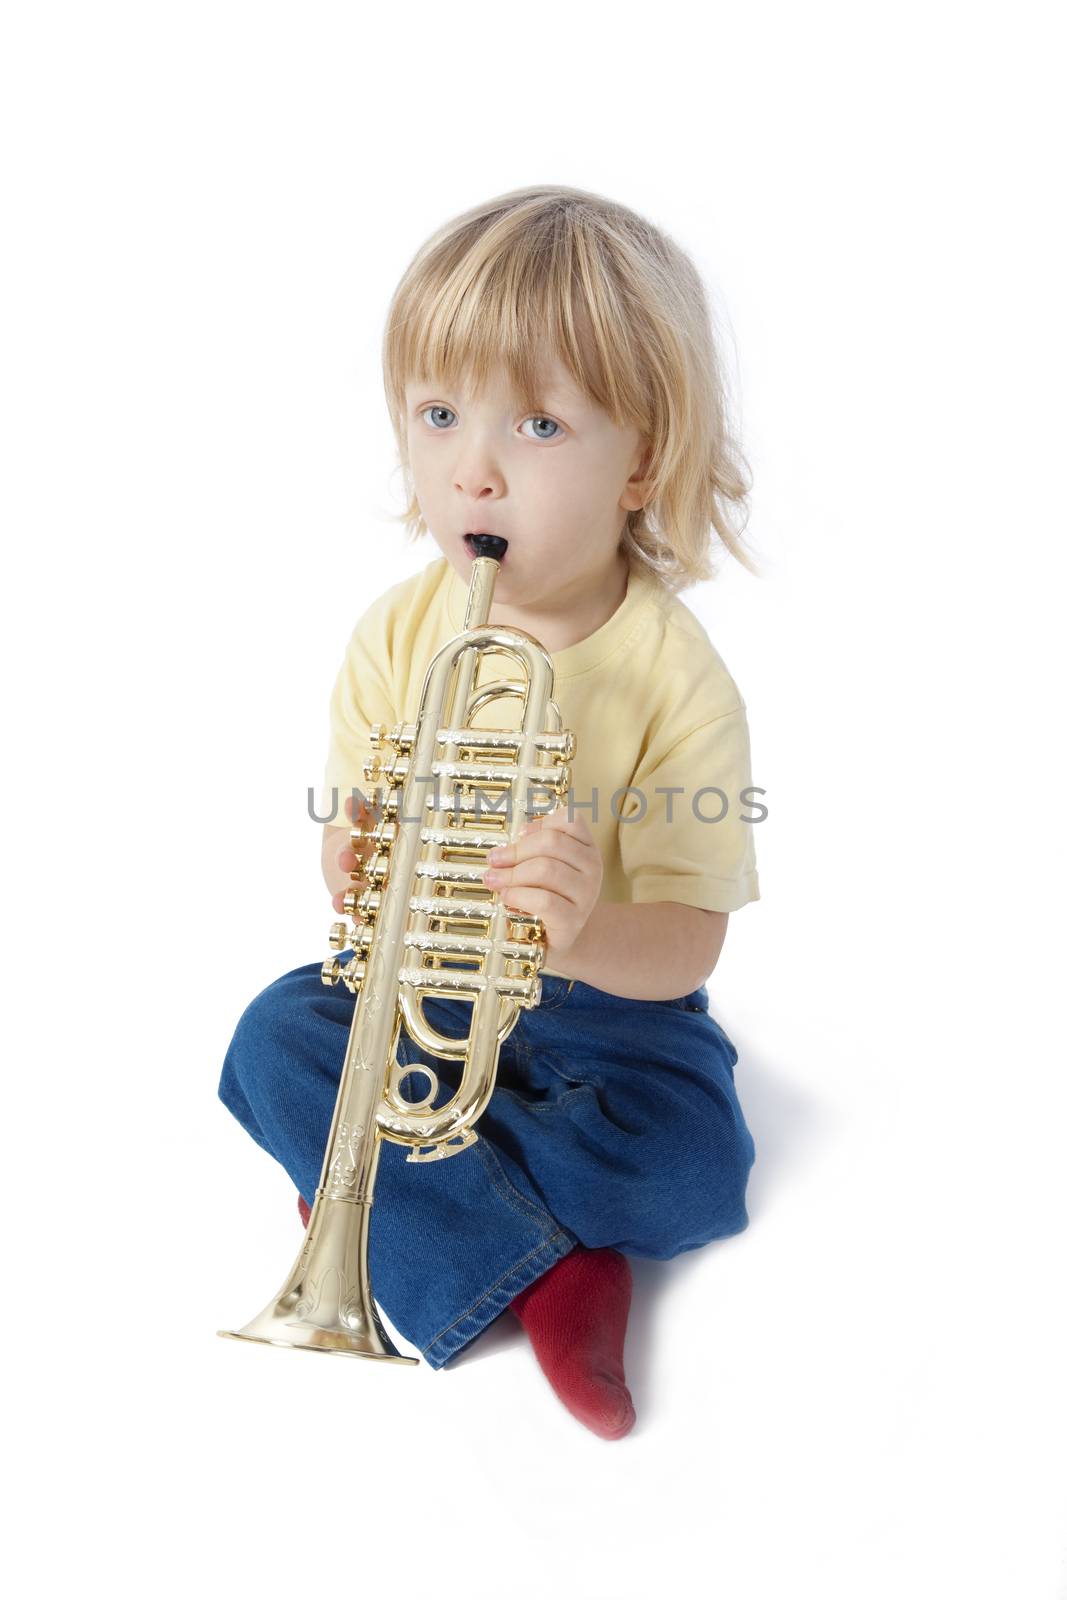 boy with toy trumpet by courtyardpix